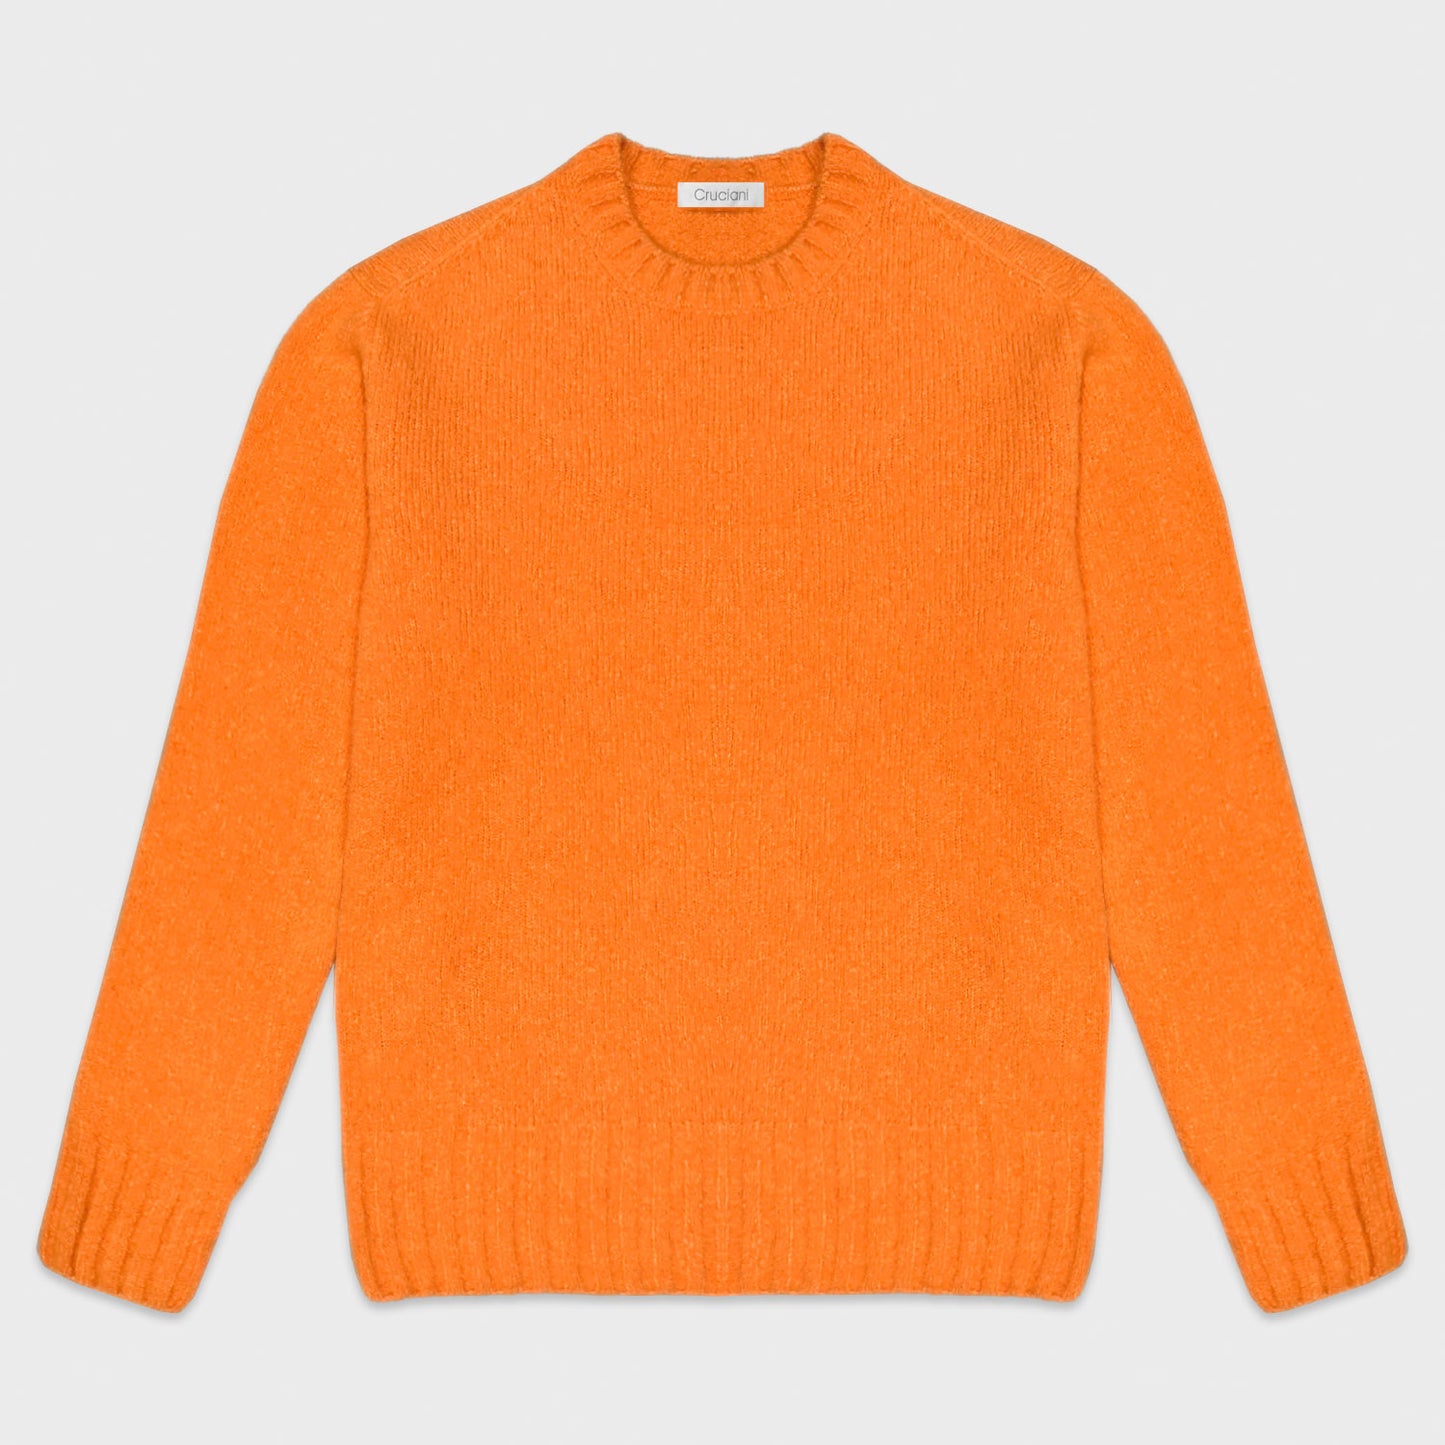 Pumpkin Orange Shetland Wool Crewneck Sweater Cruciani. Cool pumpkin orange sweater made with shetland wool, not hispid knit to the touch a luxurious reinterpretation of the traditional Scottish Shetland sweater, made in Italy by Cruciani